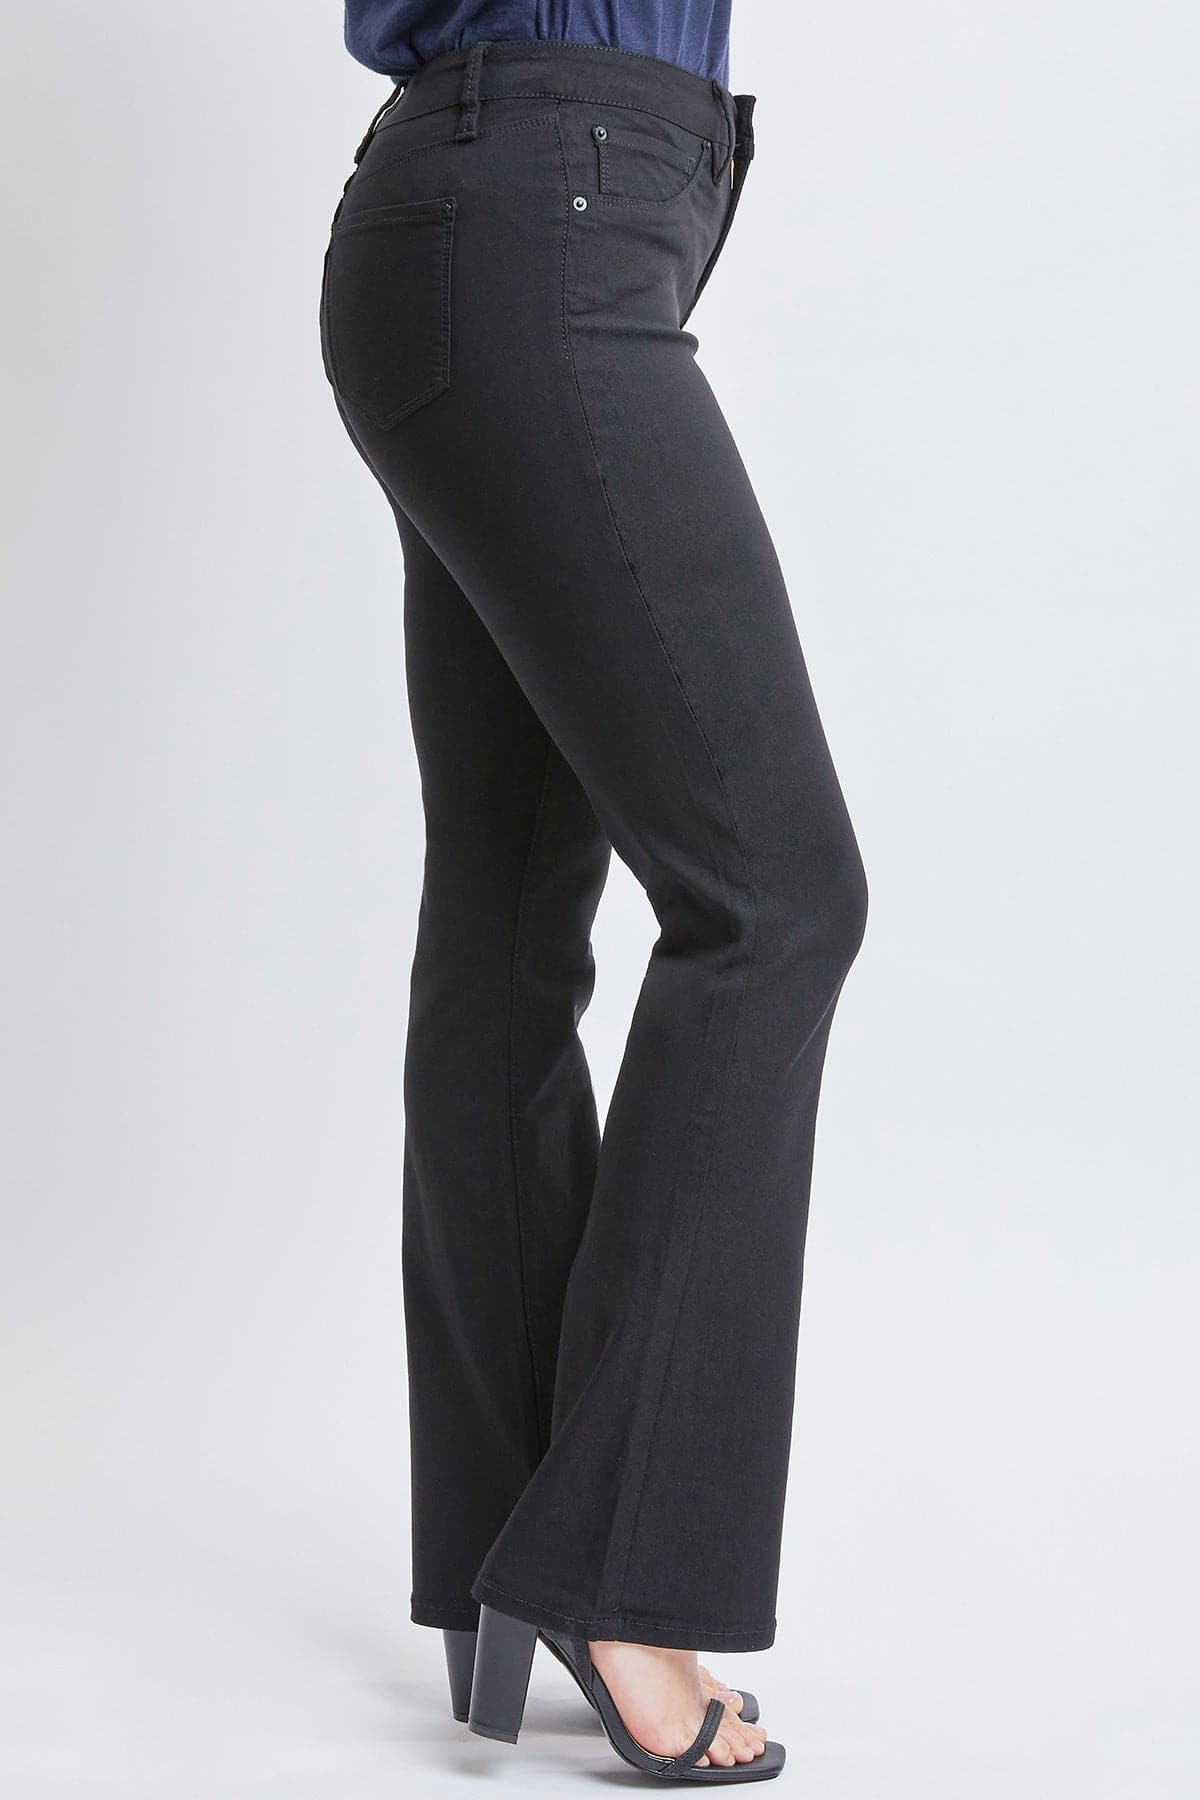 Baleaf Women's Mid Rise Workleisure Petite Tall Bootcut Pants